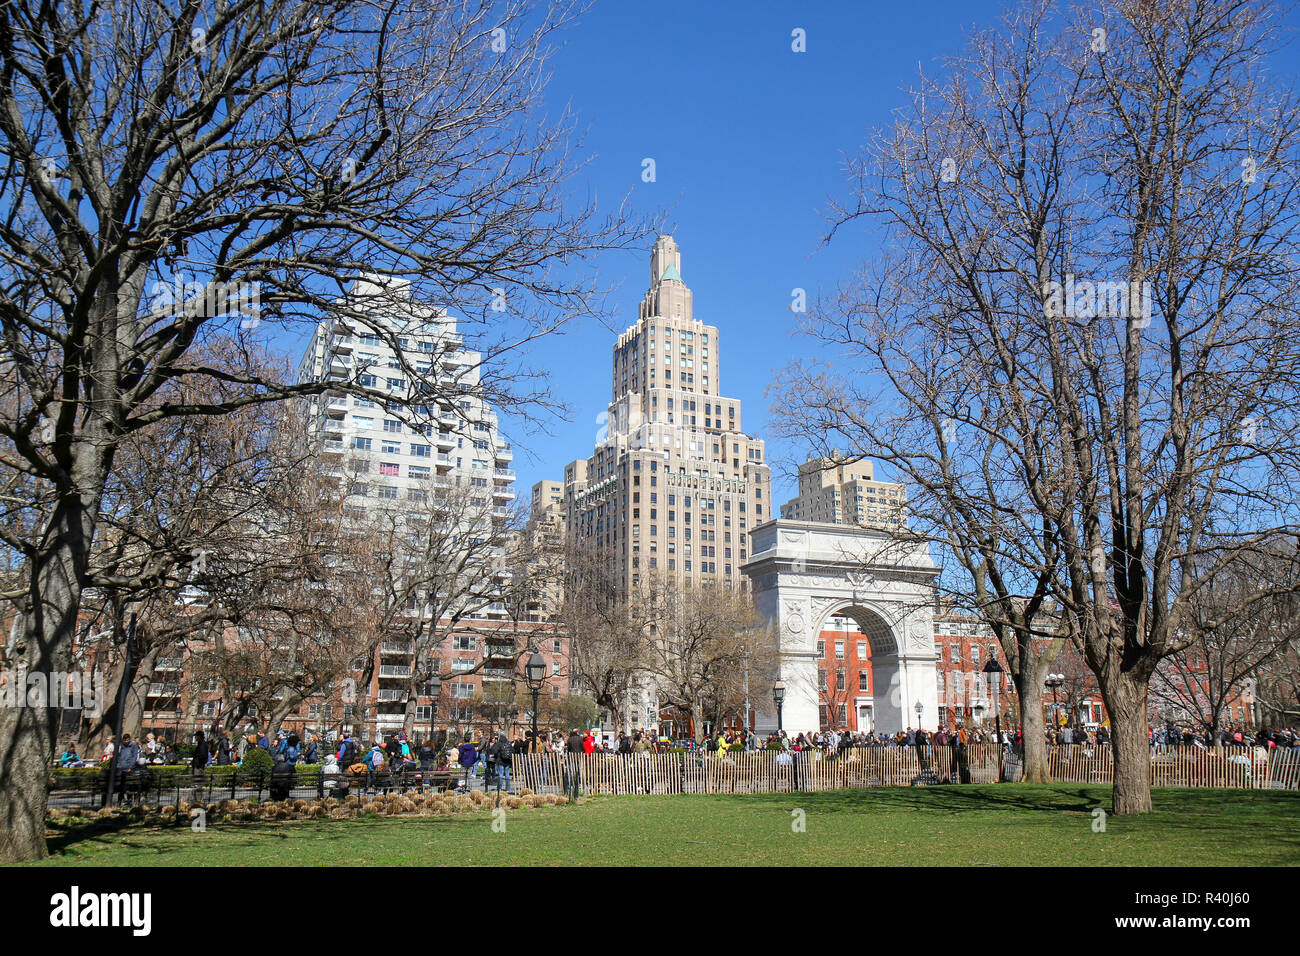 Washington Square Park, Greenwich Village, New York, USA Banque D'Images